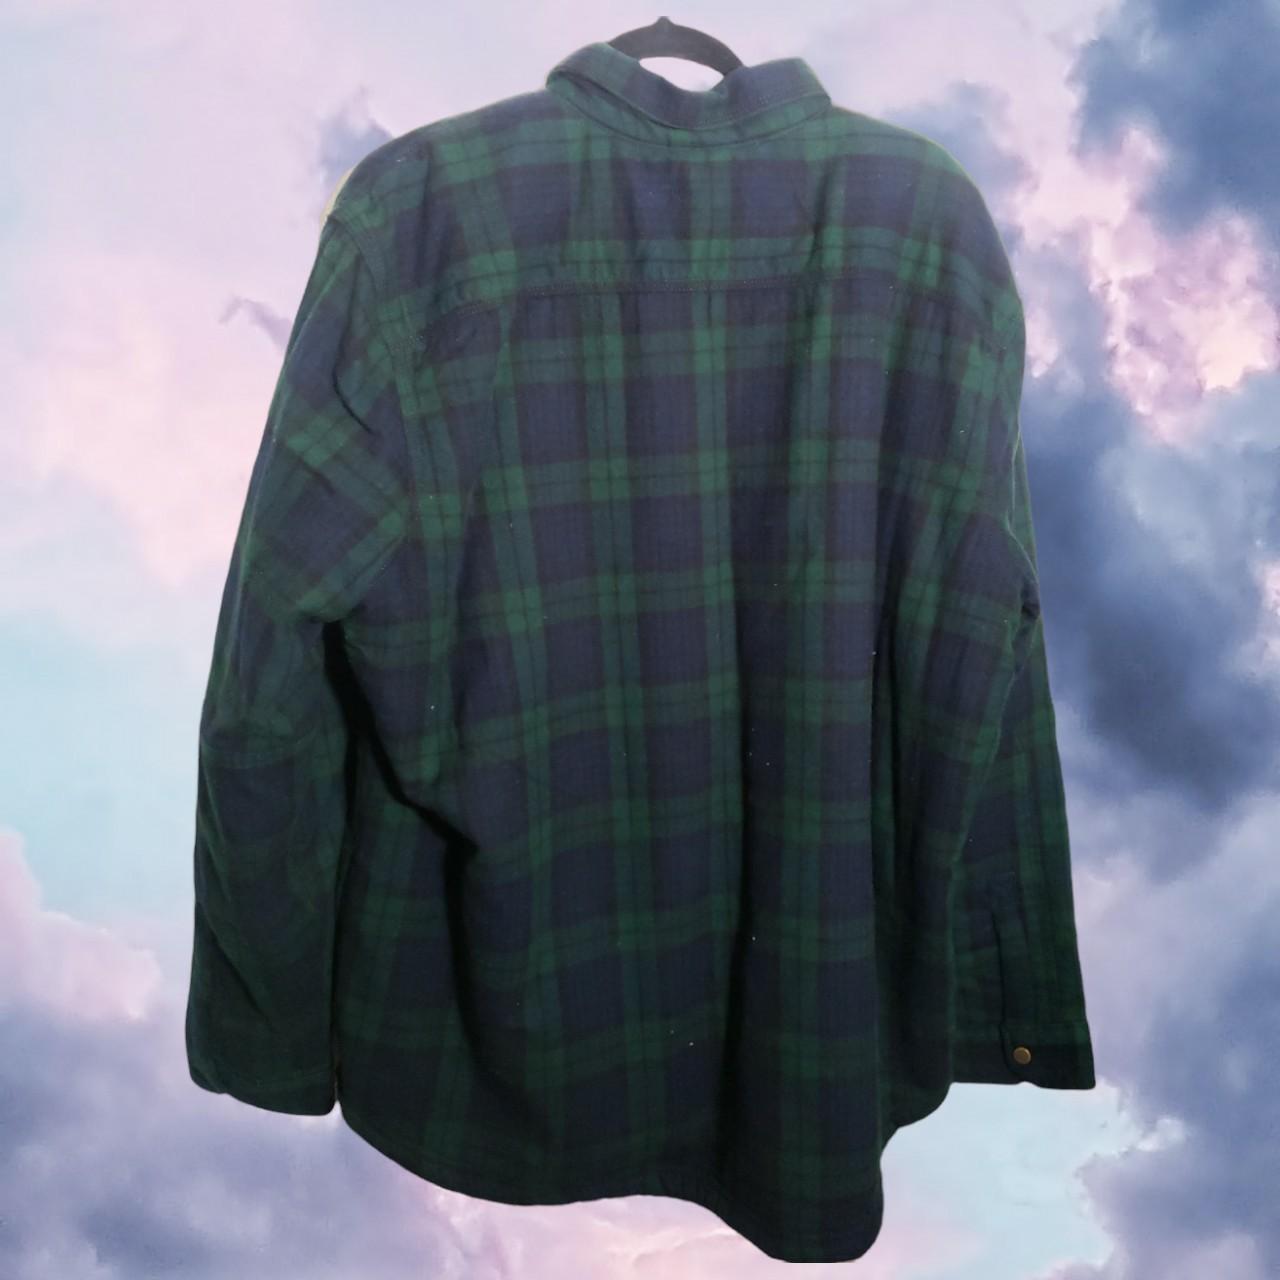 Product Image 2 - Mens L.L.Bean sherpa-lined plaid shirt,